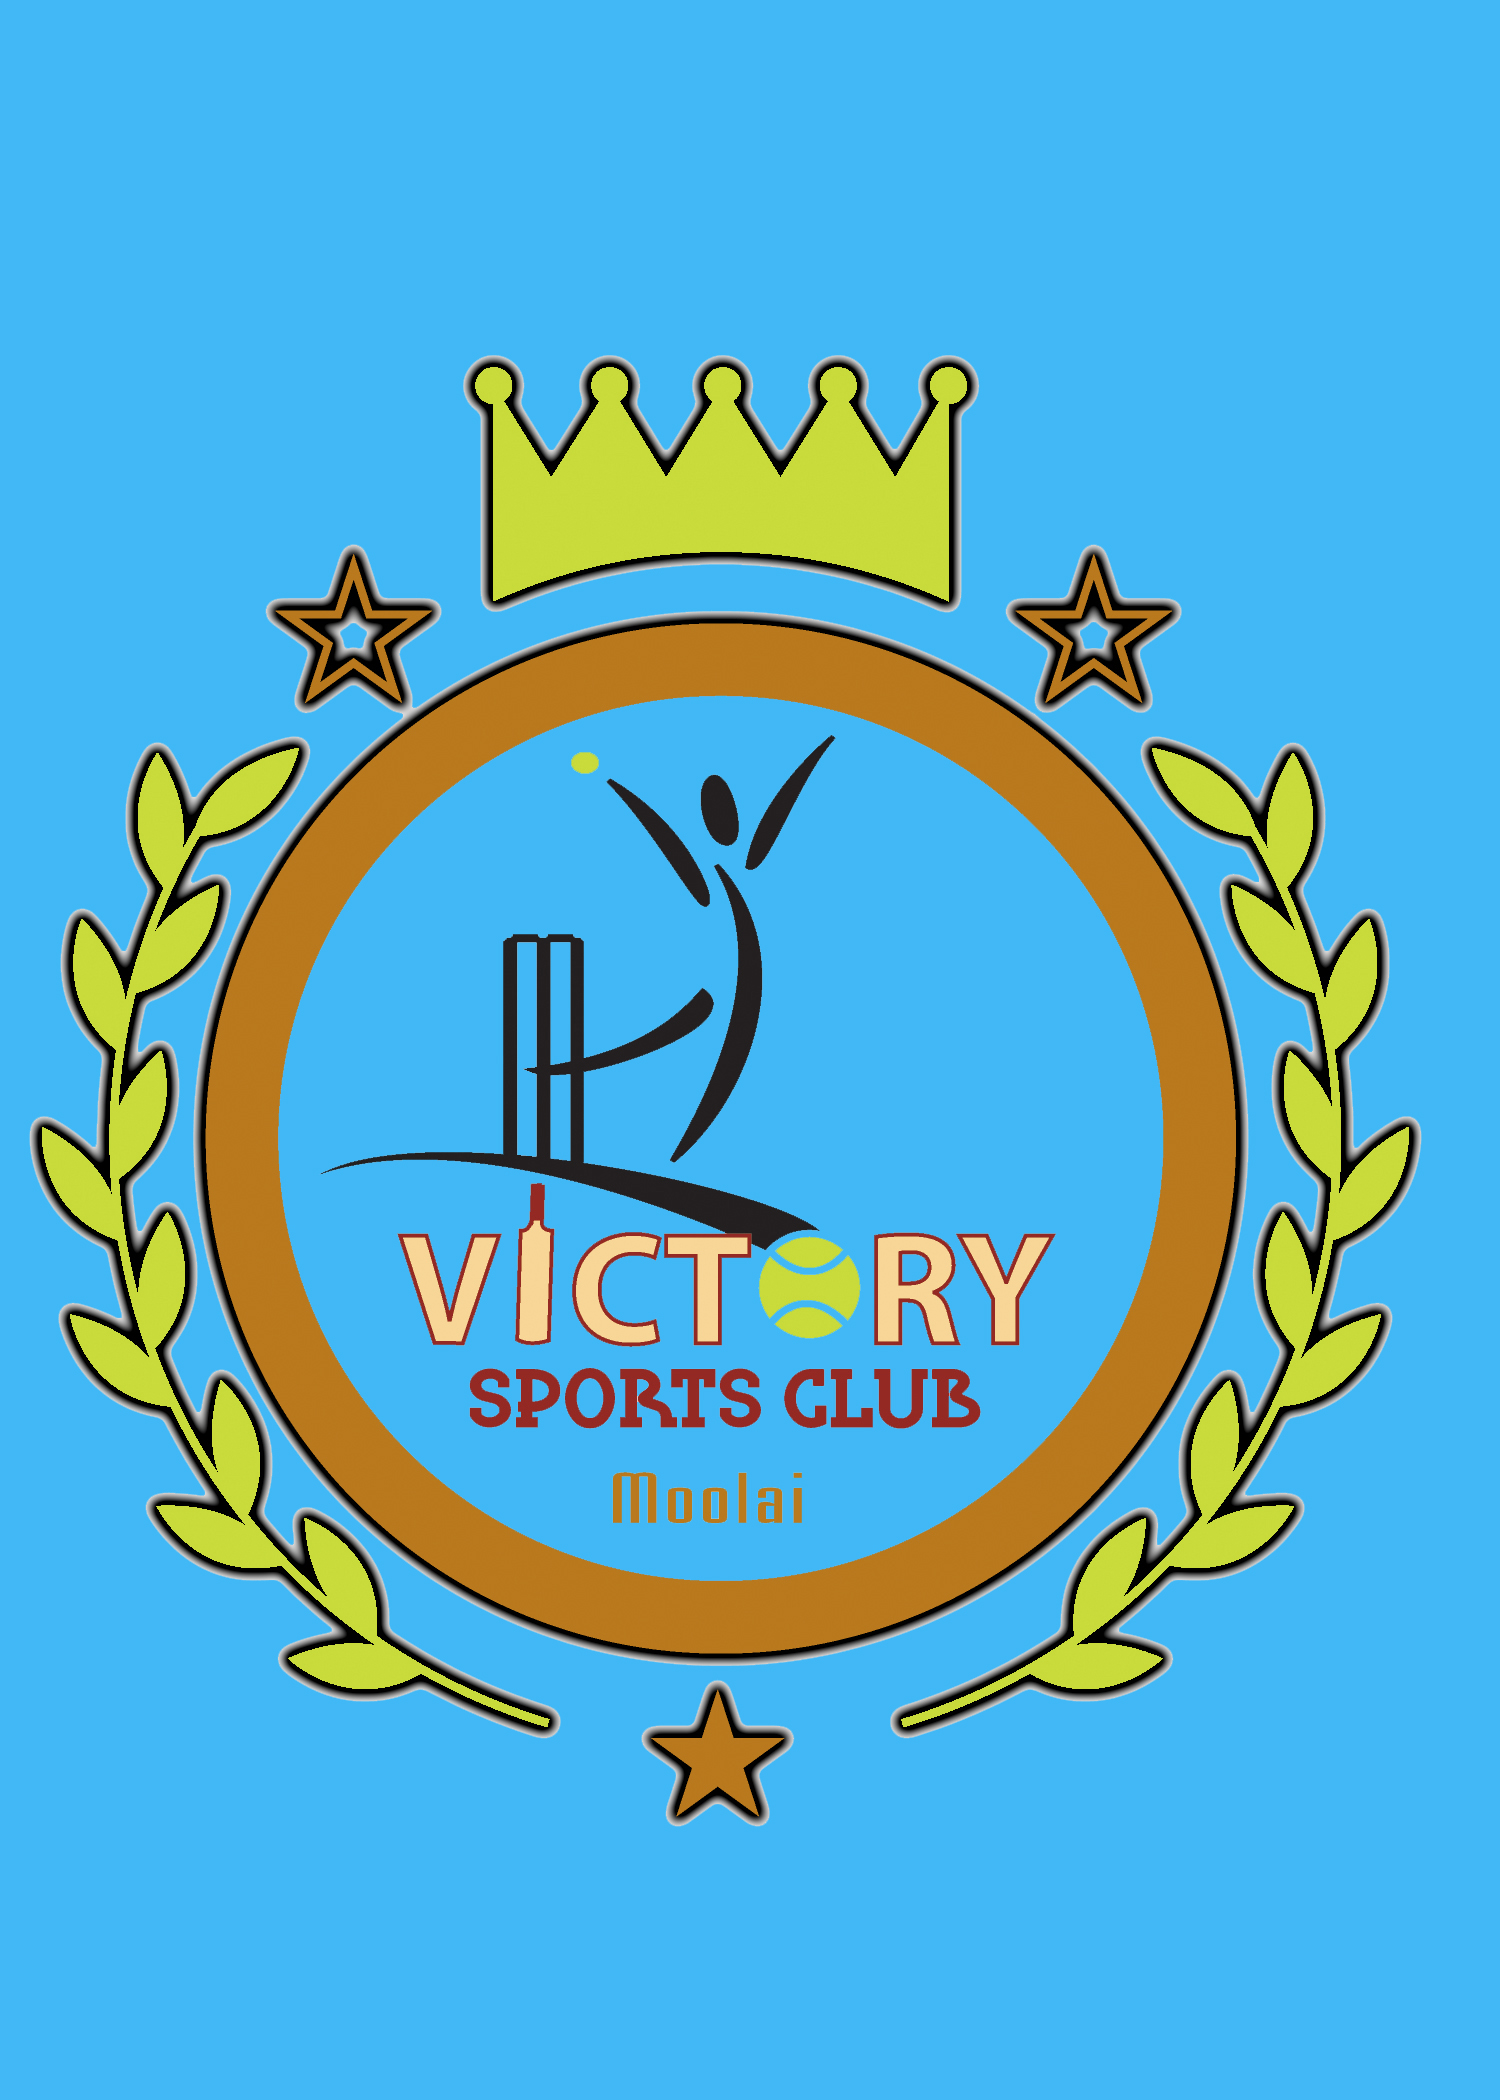 Victory Sports Club